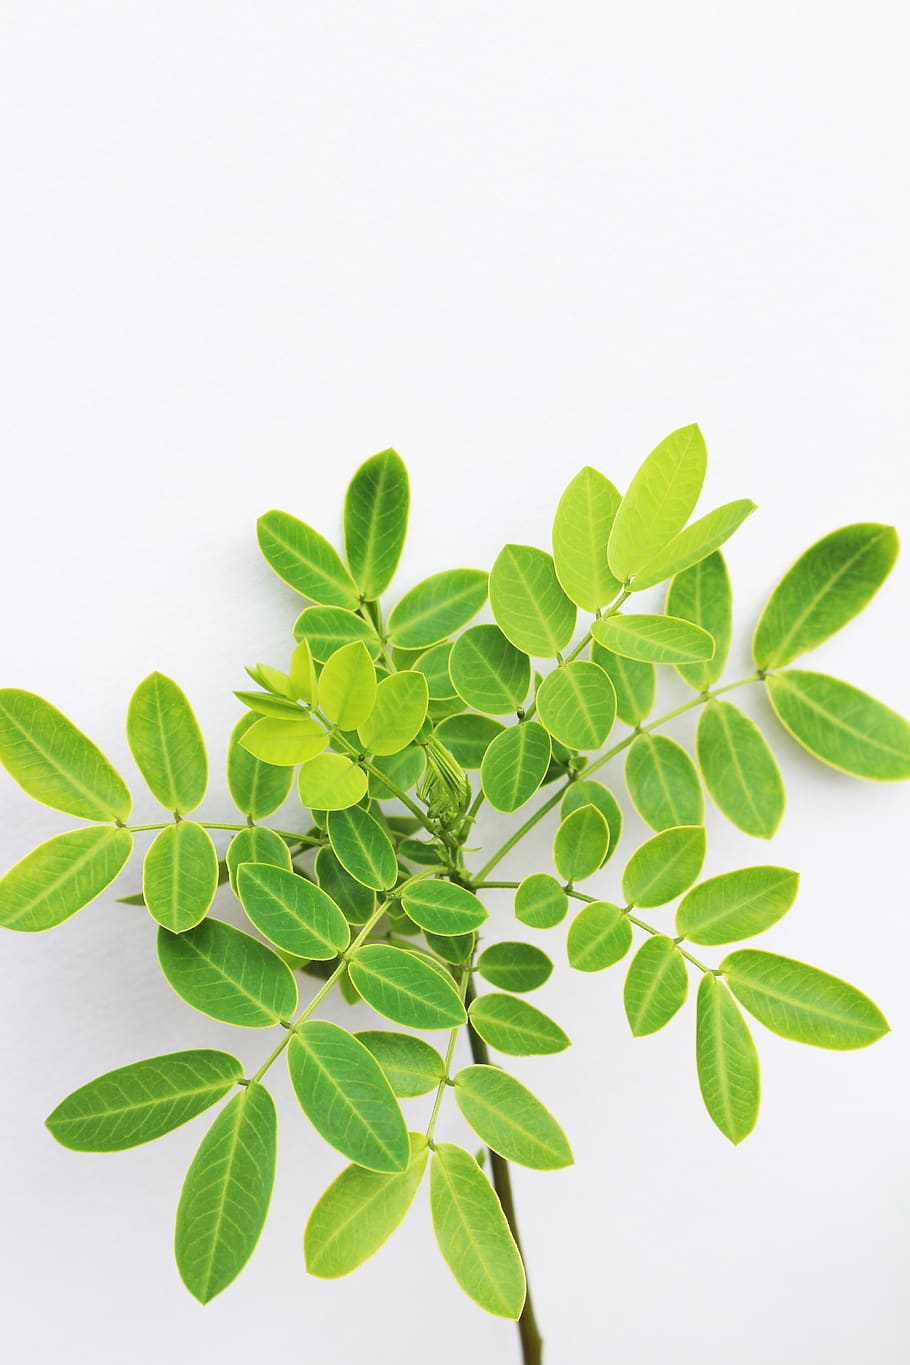 cassia, green, plant, twig, branch, leaves, decorative, decoration, nature, white